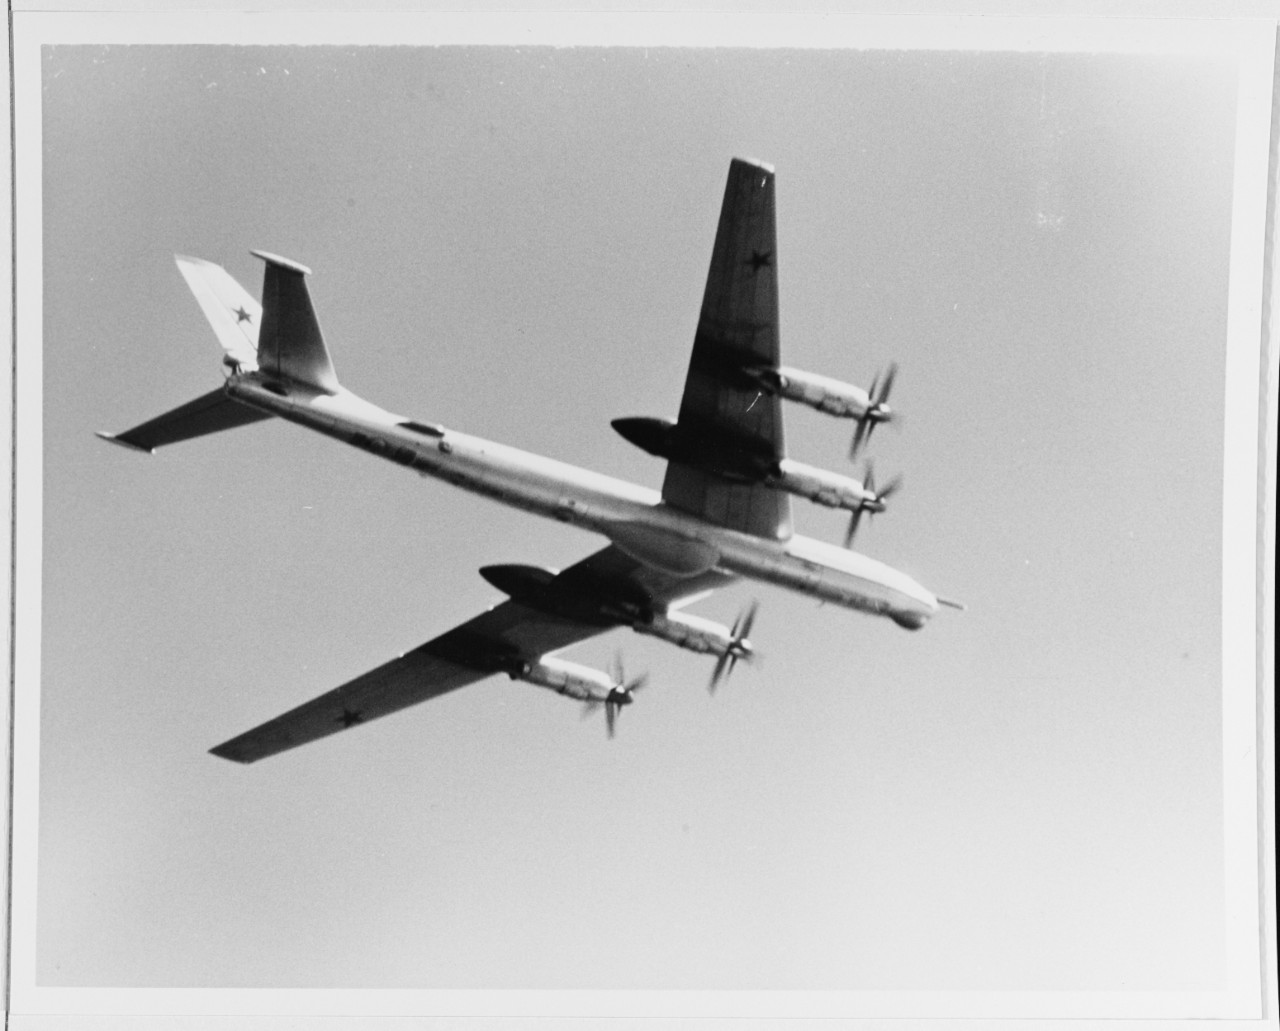 Soviet TU-20 "Bear"  Bomber